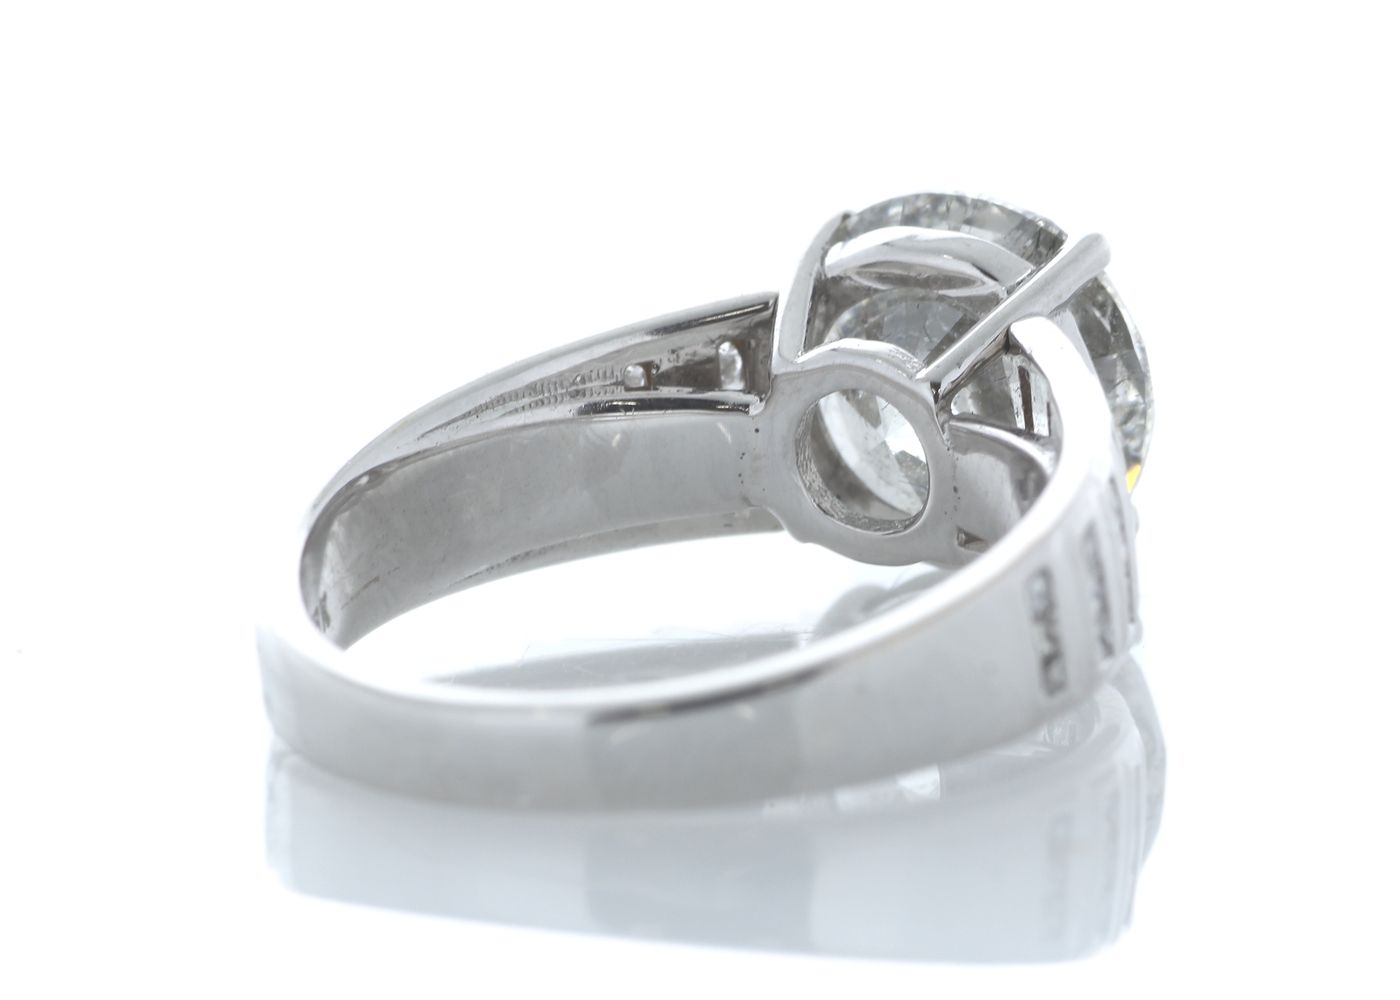 18k White Gold Single Stone Prong Set With Stone Set Shoulders Diamond Ring 4.65 Carats - Image 3 of 5